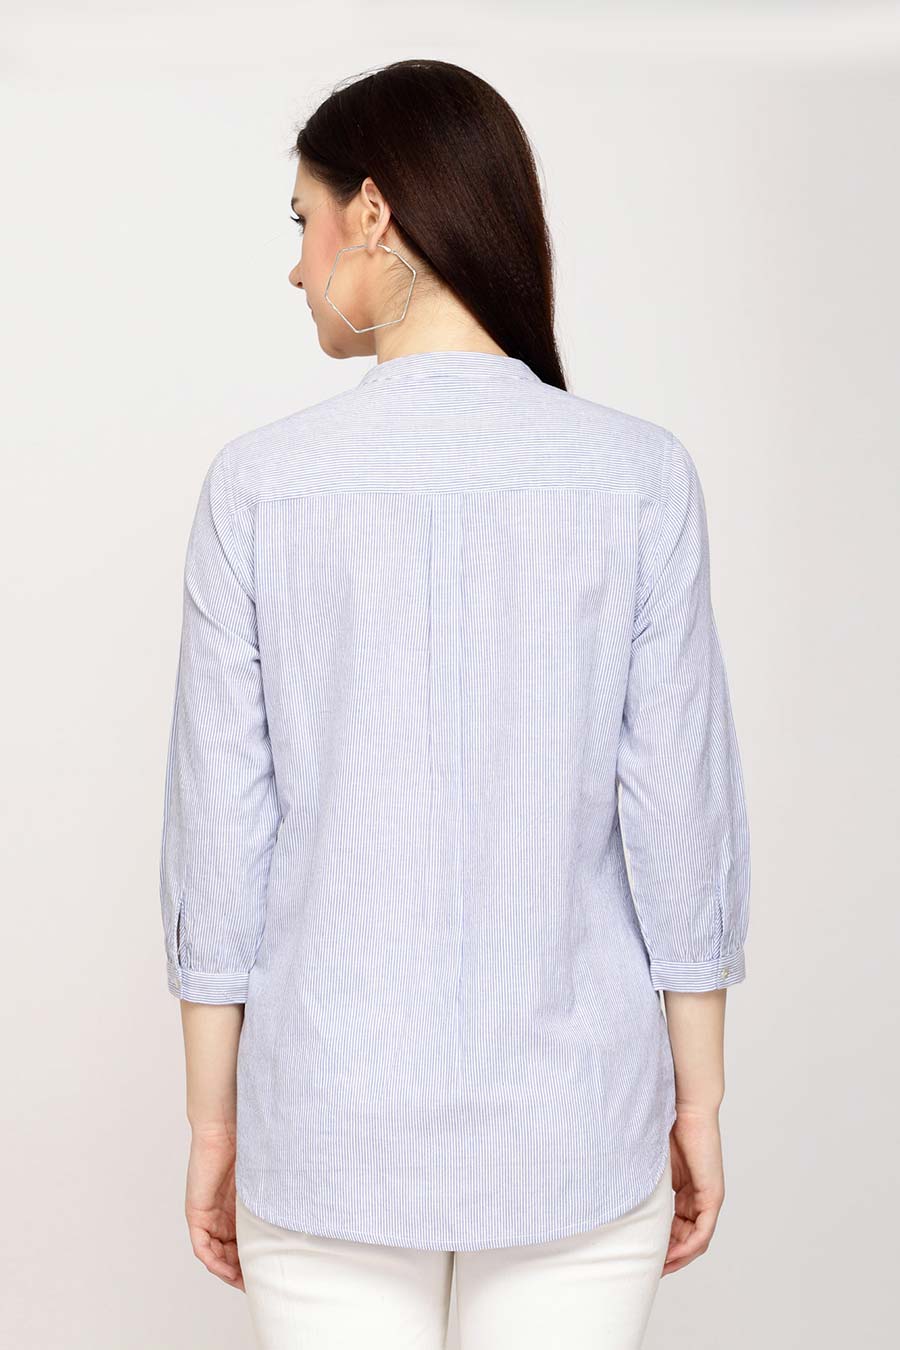 Lace & Pintuck Blue Stripe Shirt Top